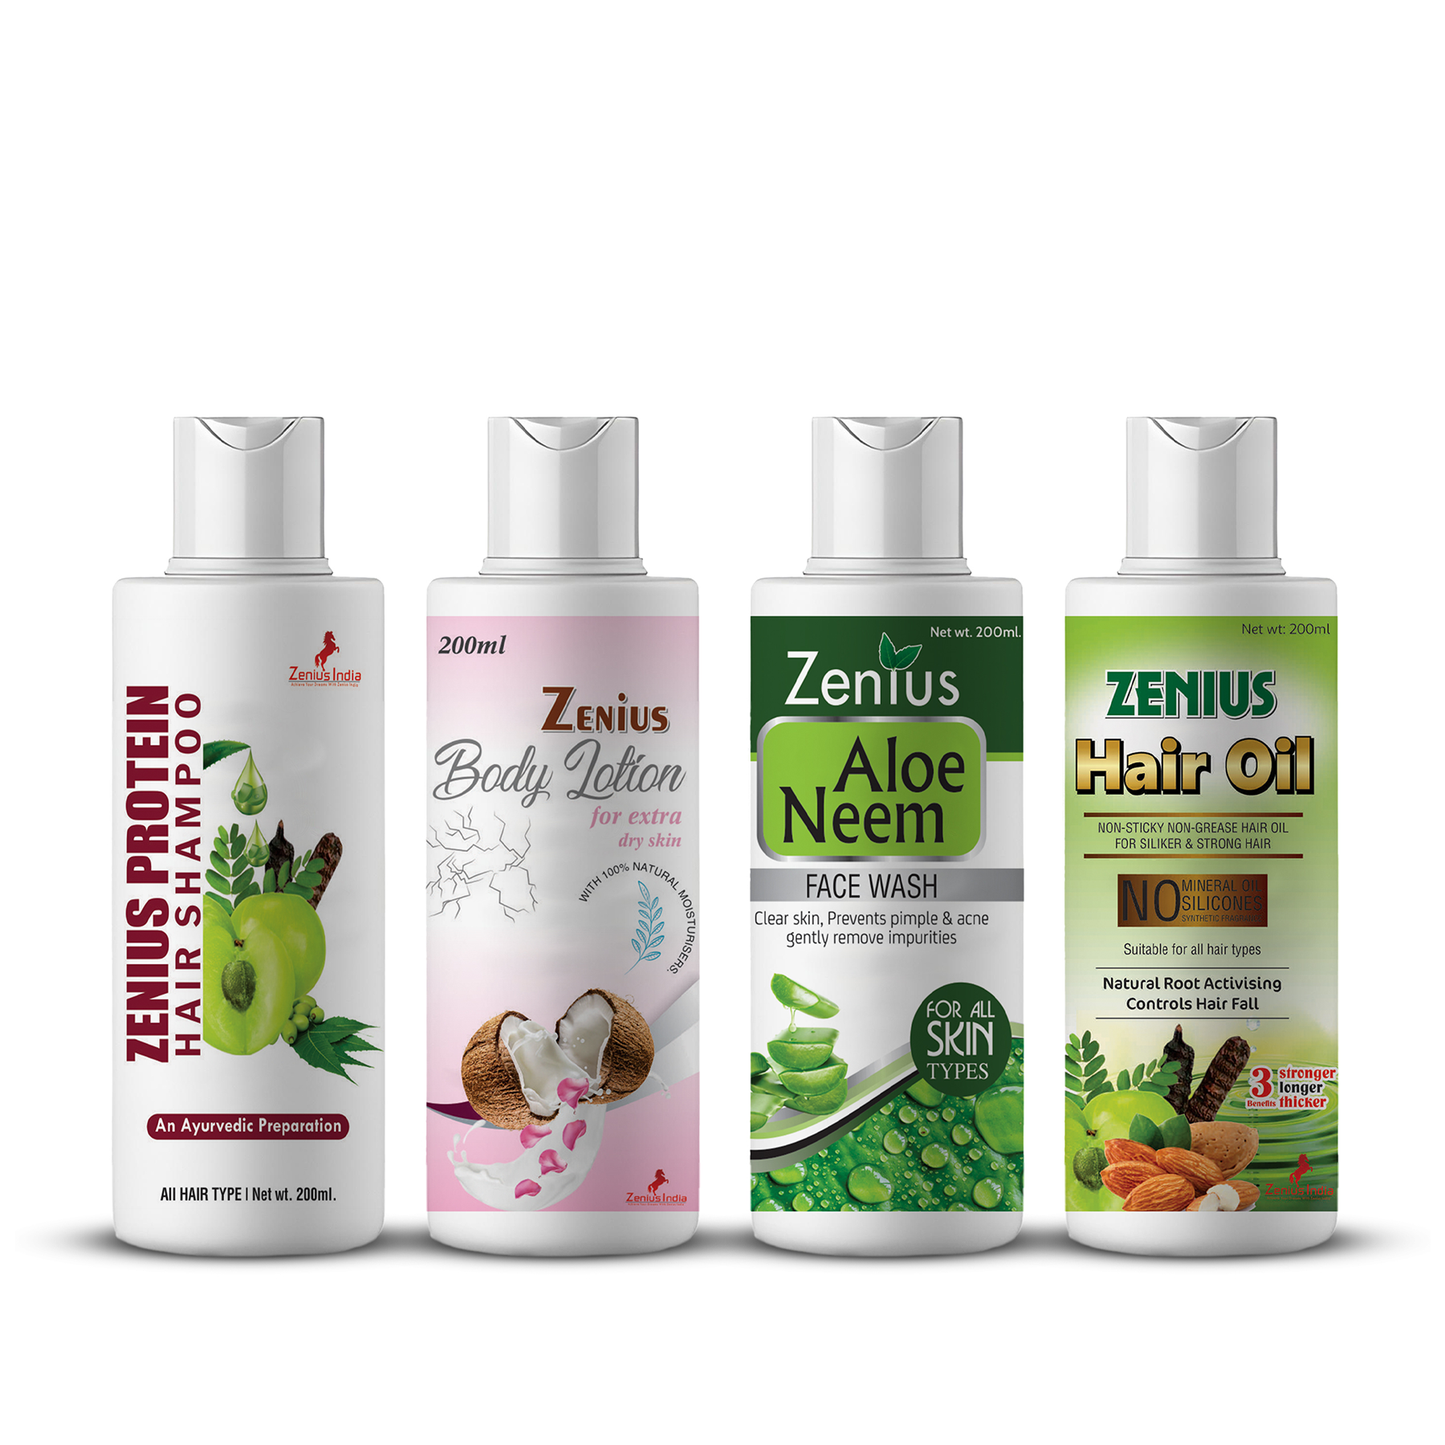 Zenius Beauty Care Kit (Shampoo - 200ml, Body Lotion - 200ml, Hair Oil - 200ml and Aloe Neem Facewash - 200ml)